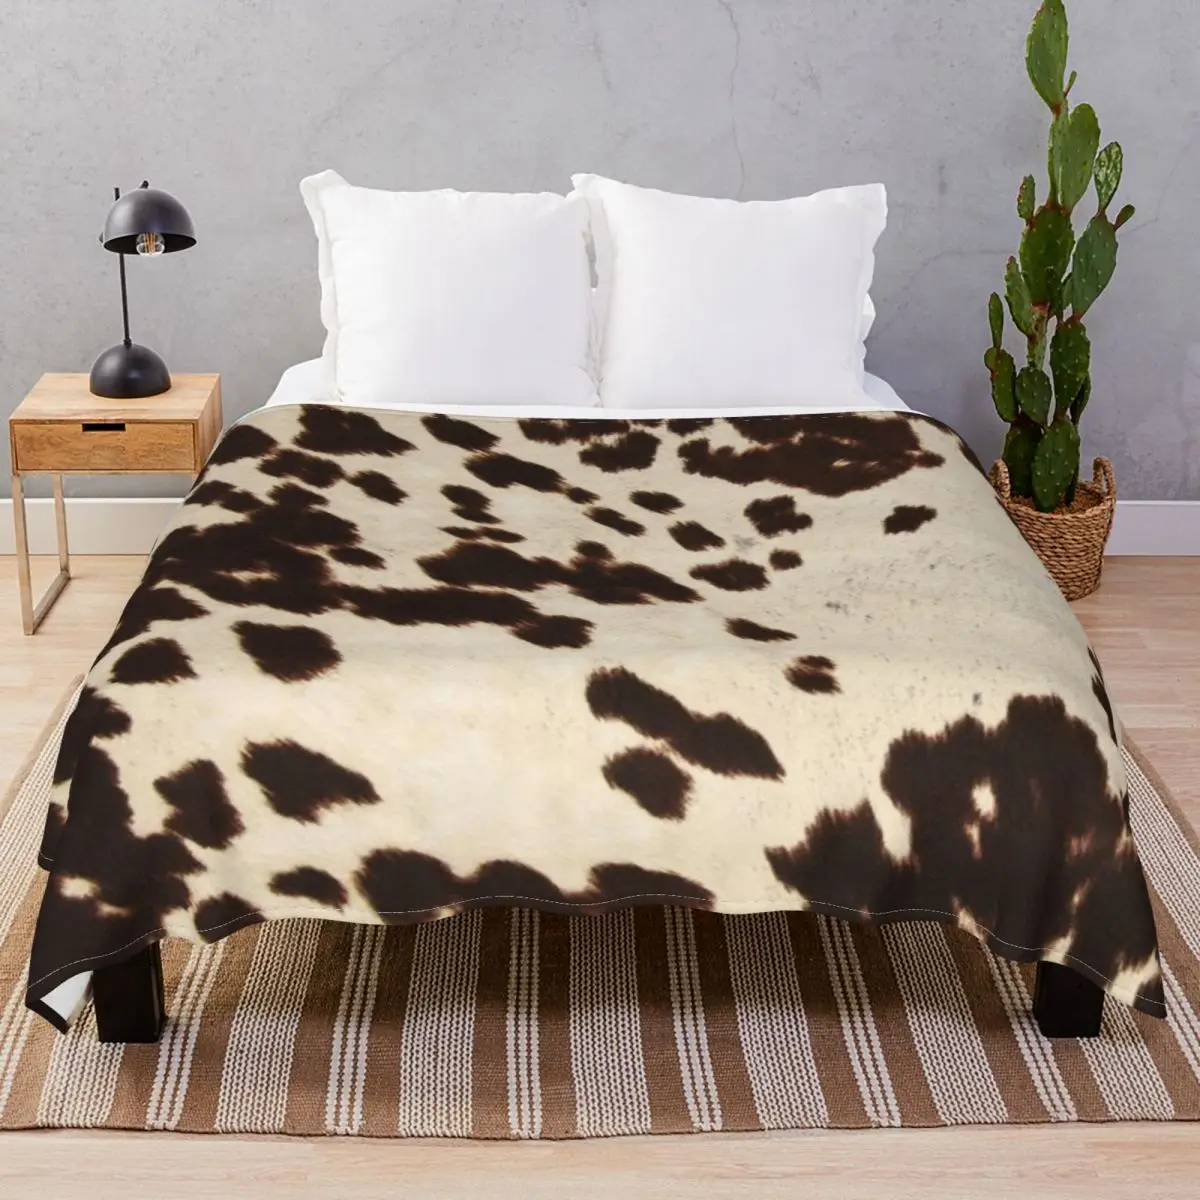 Brown Cowhide 2 Blankets Coral Fleece Plush Decoration Lightweight Thin Throw Blanket for Bedding Sofa Travel Cinema